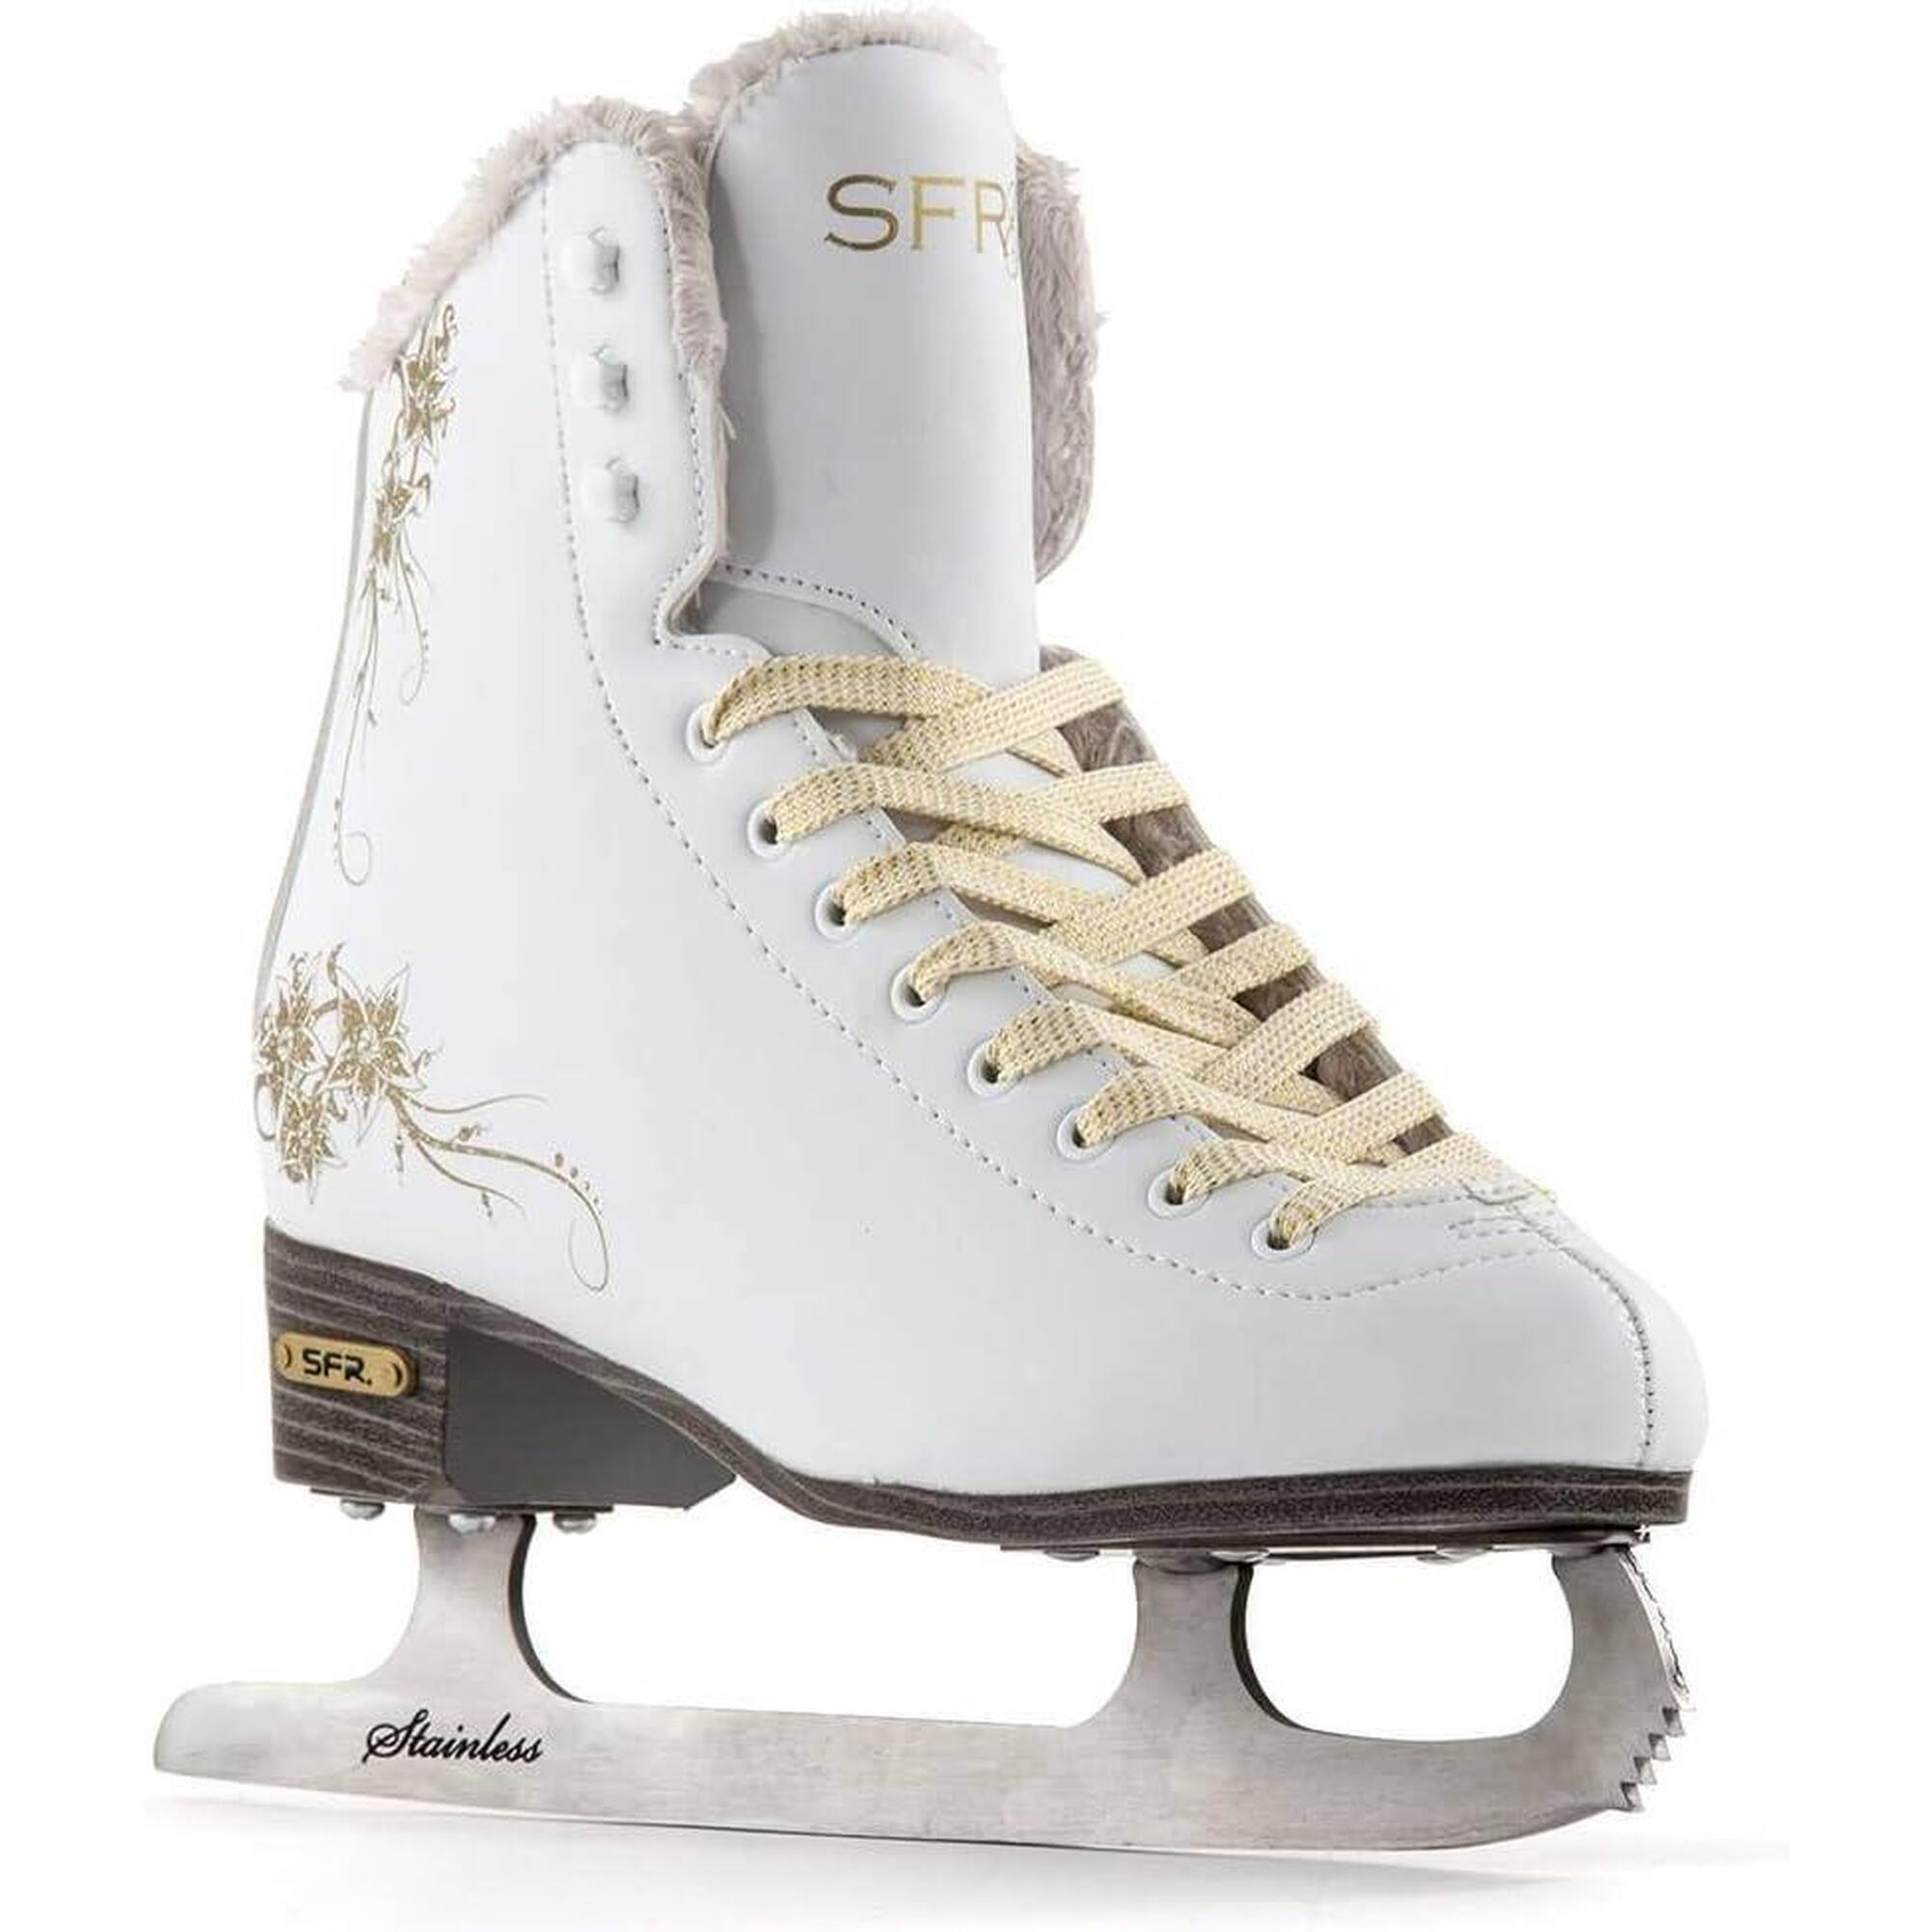 SFR Glitra White Ice Skates - Size: UK 5